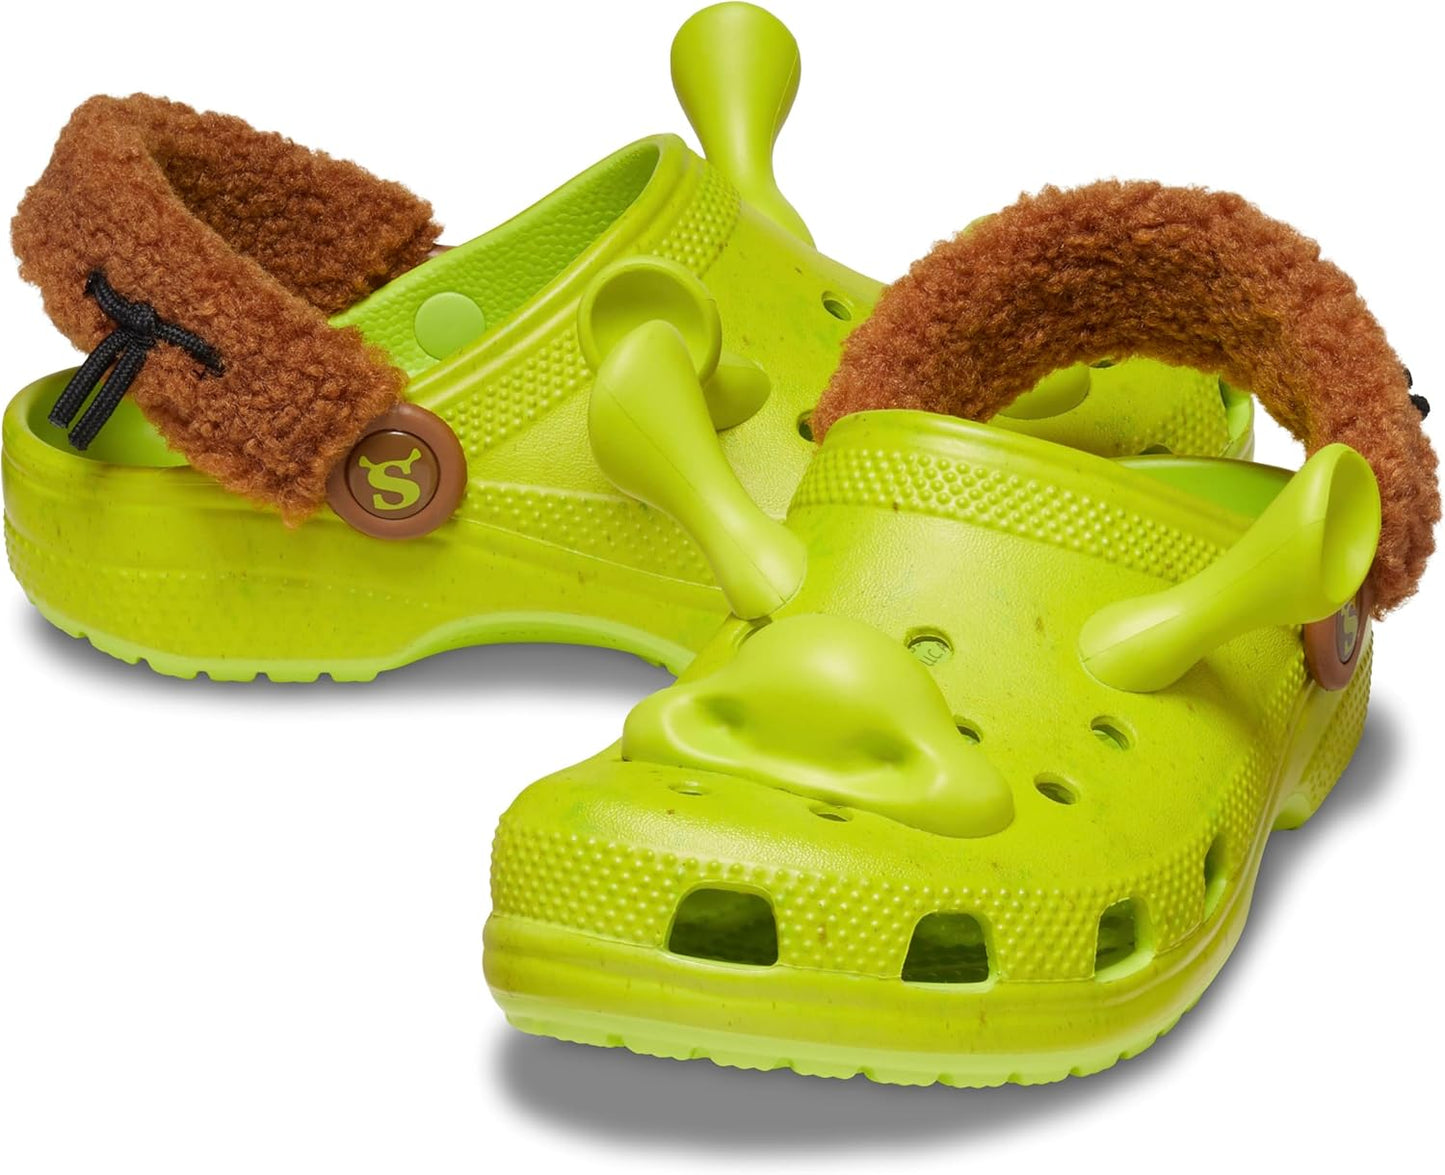 Classic DreamWorks Green Men's Size 7 / Women's Size 9 Shrek Crocs Clog, new in package